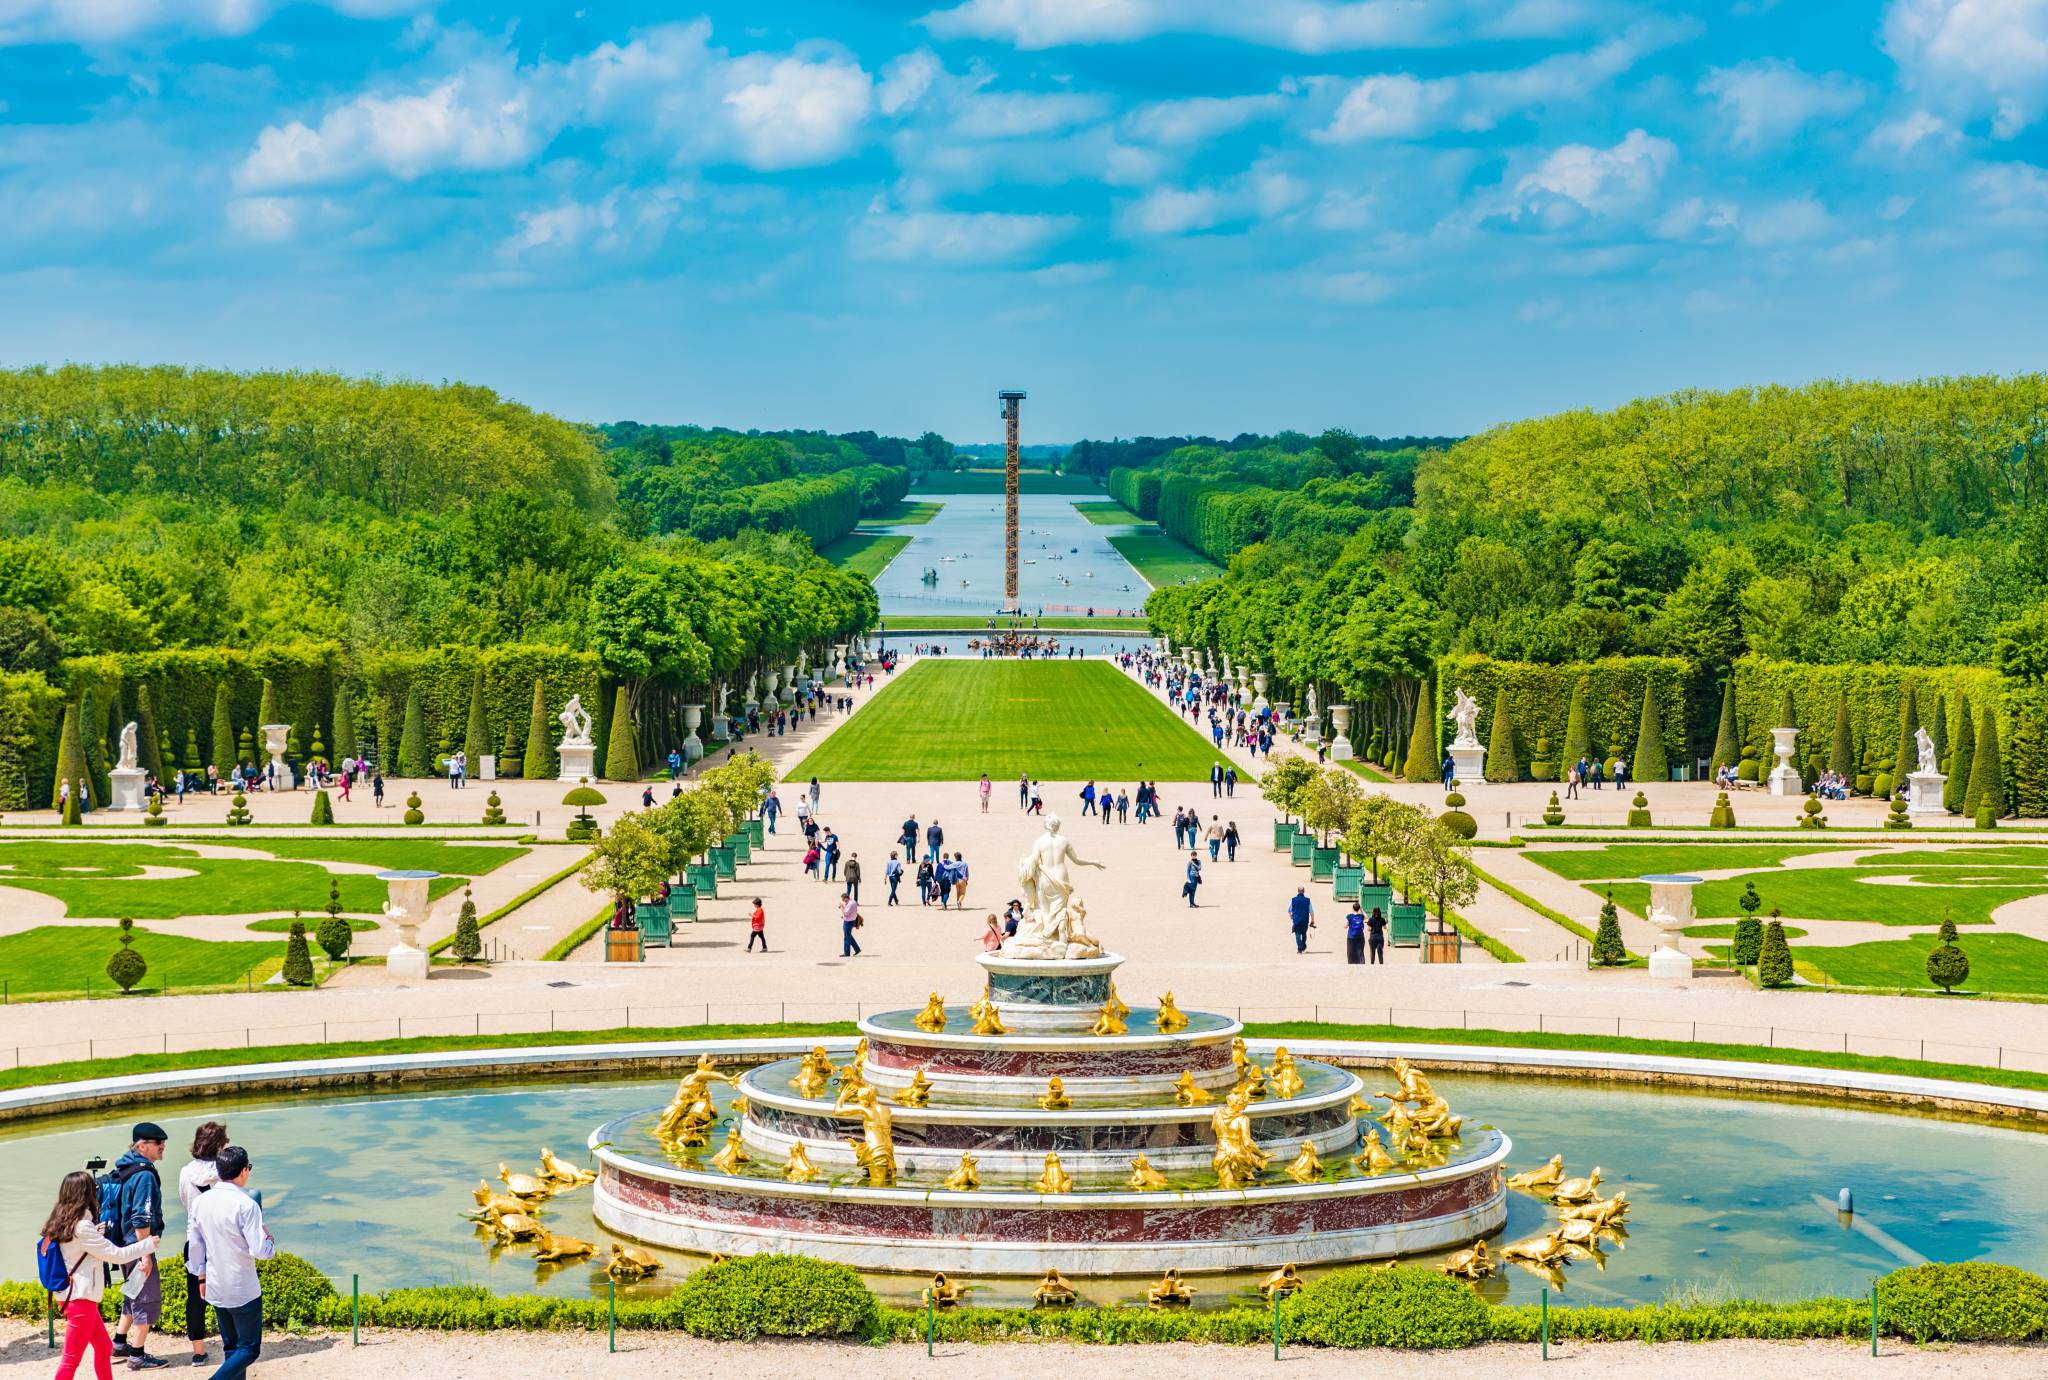 Chateau versailles. Версальский дворец сады и парки. Версальский дворец Версаль Франция. Парк Версаль в Париже. Дворец и парк в Версале Франция.